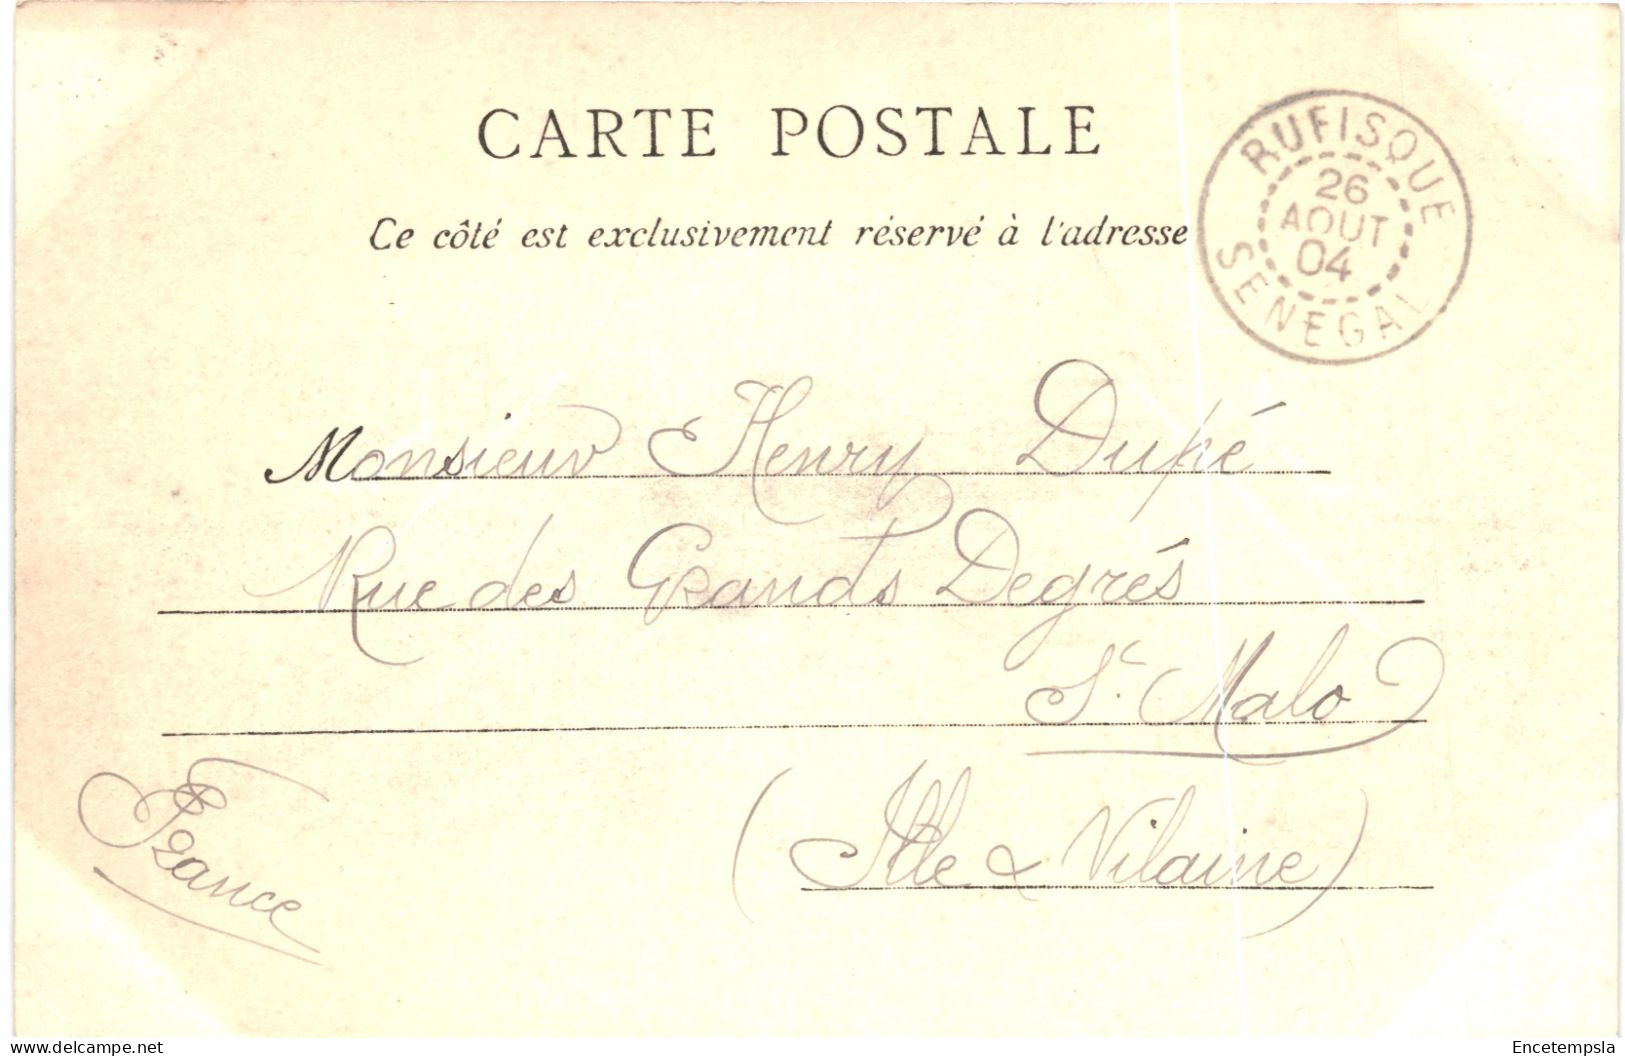 CPA Carte Postale Sénégal  RUFISQUE  Wharf    1904  VM80921 - Sénégal